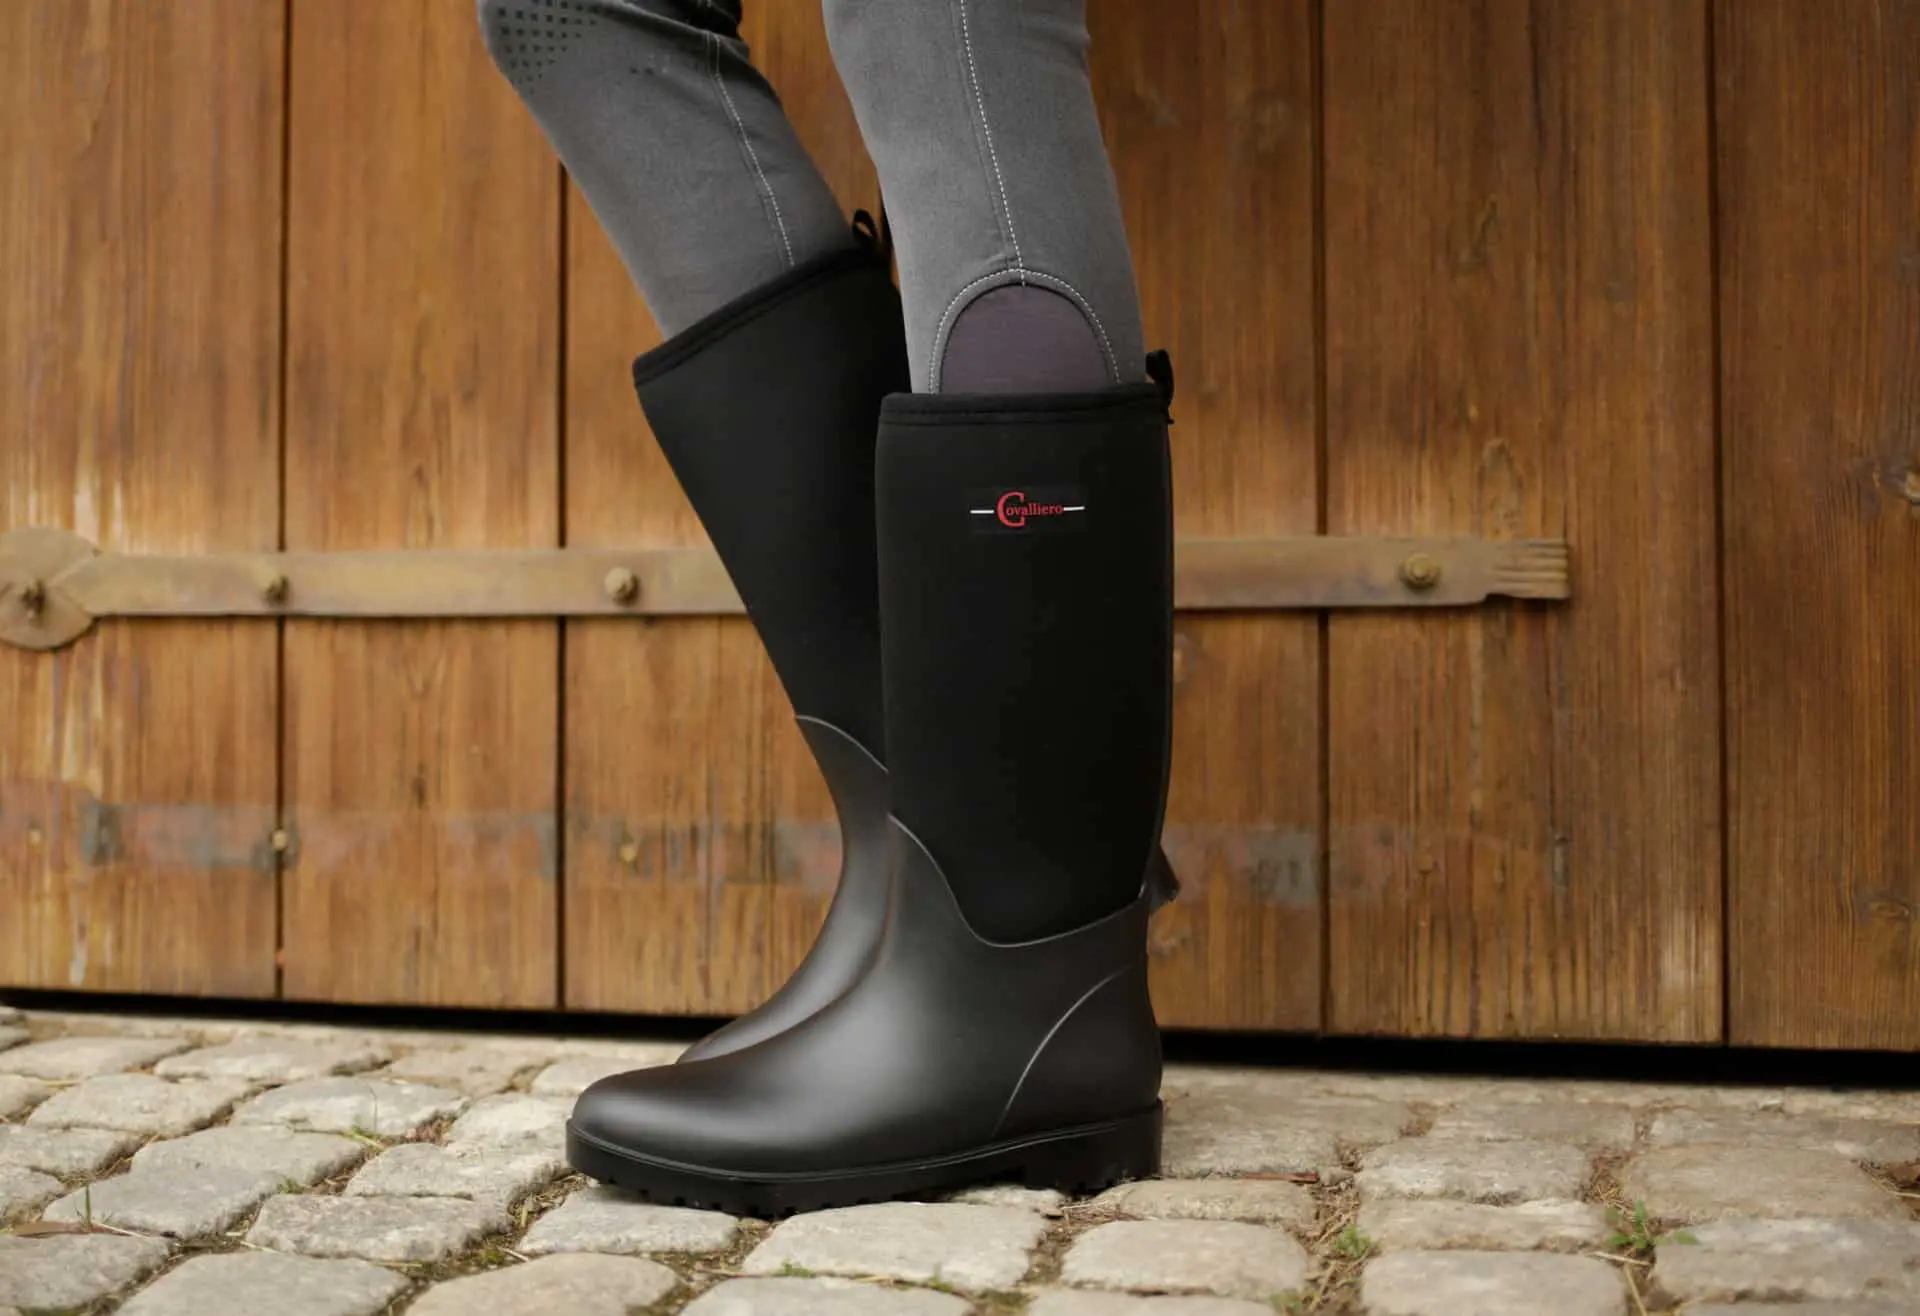 Boots NeoLite black, size 42